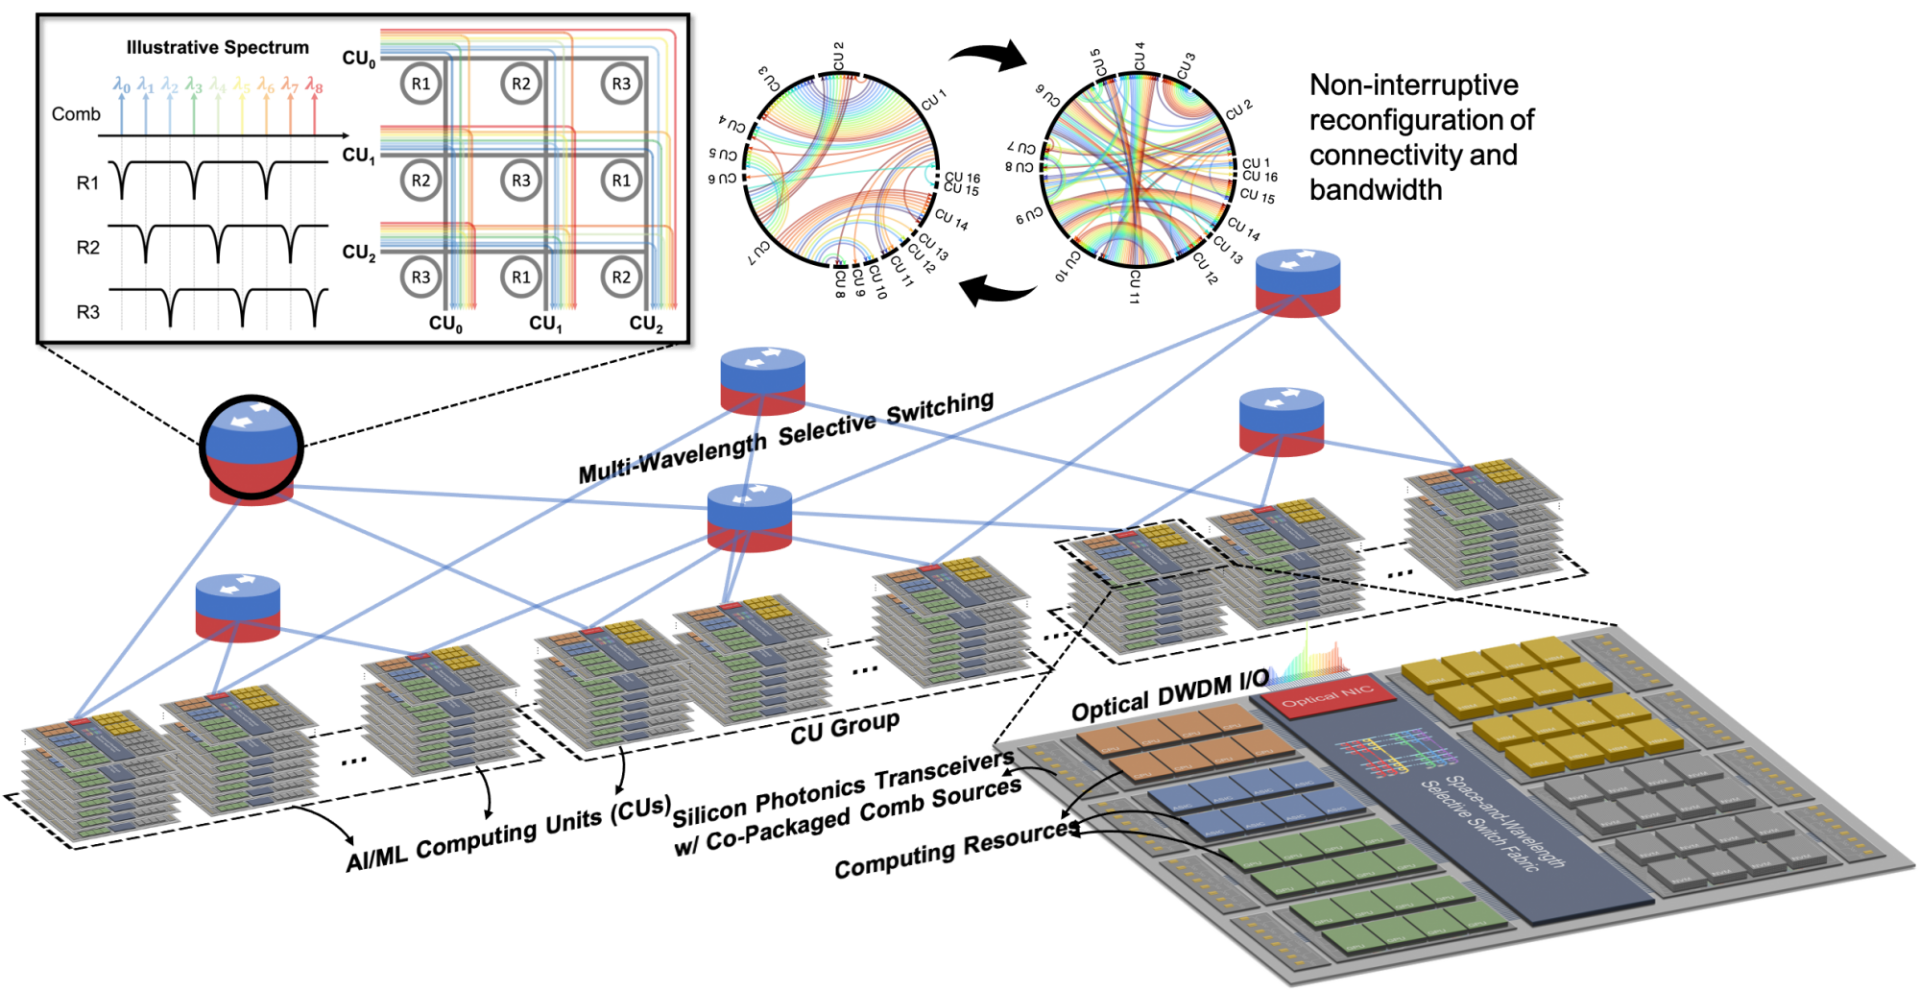 FlexPAC System Architecture